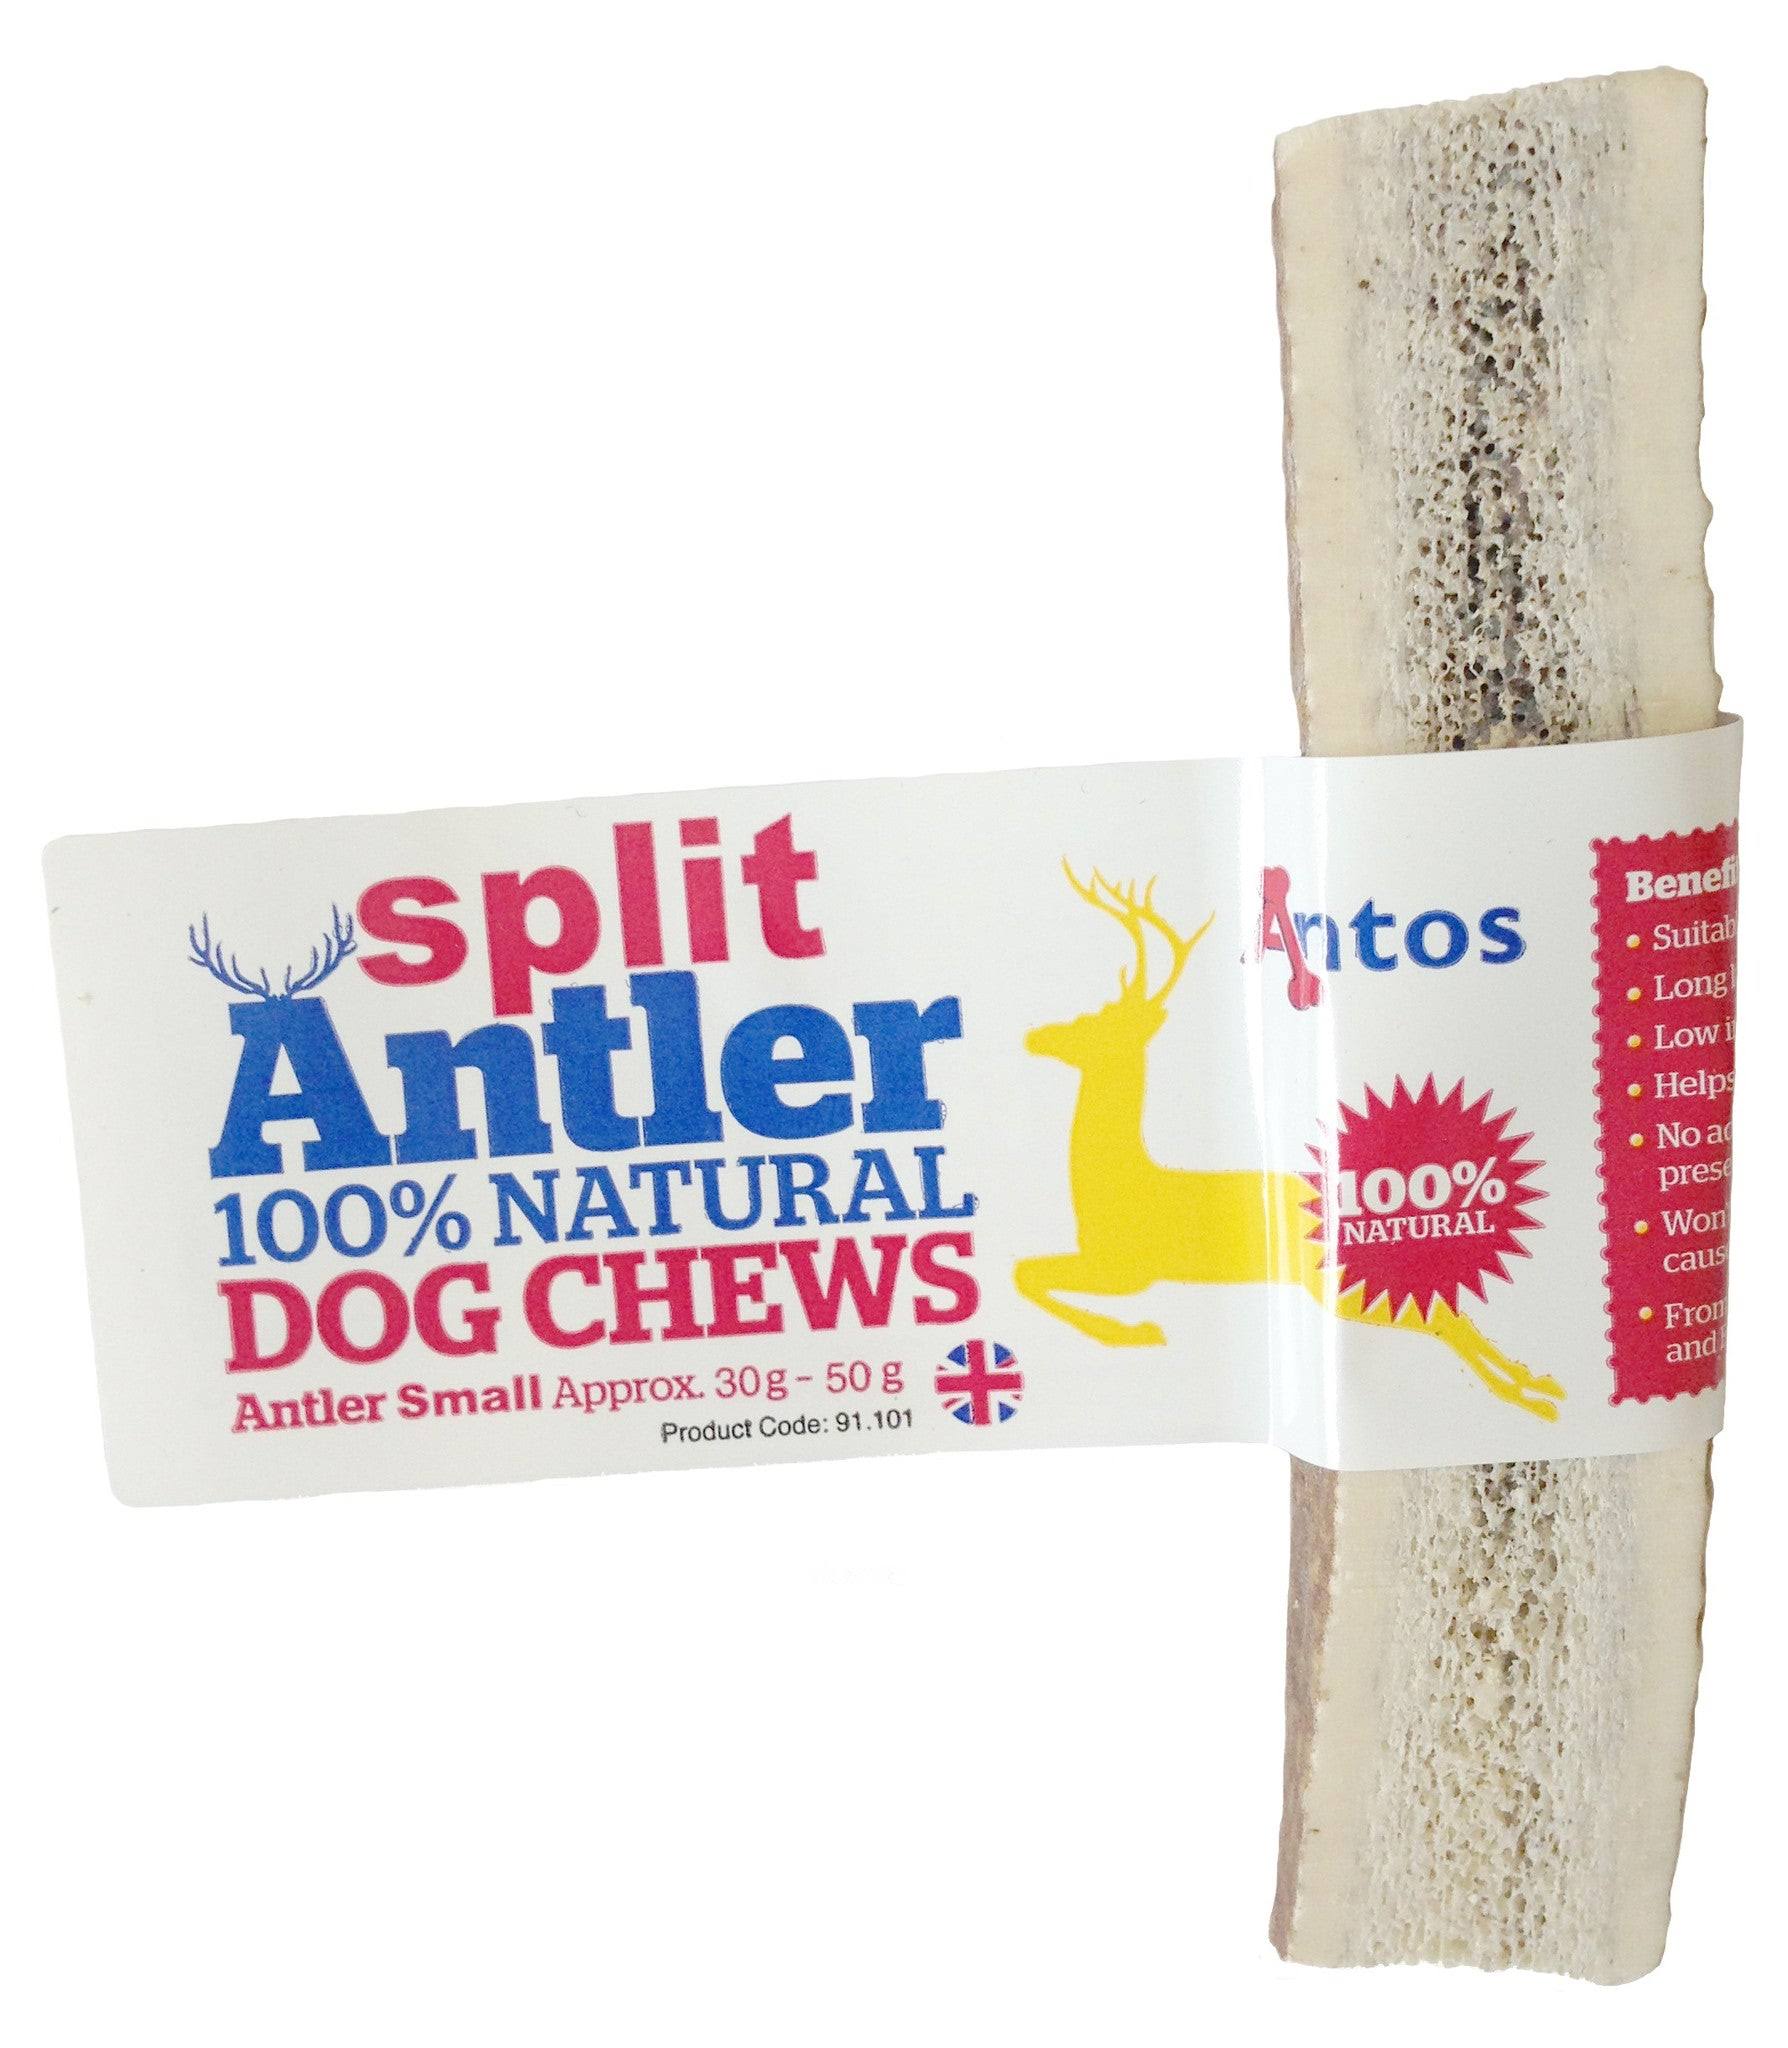 Antos Split Antler 100 Natural Dog Chew - Small